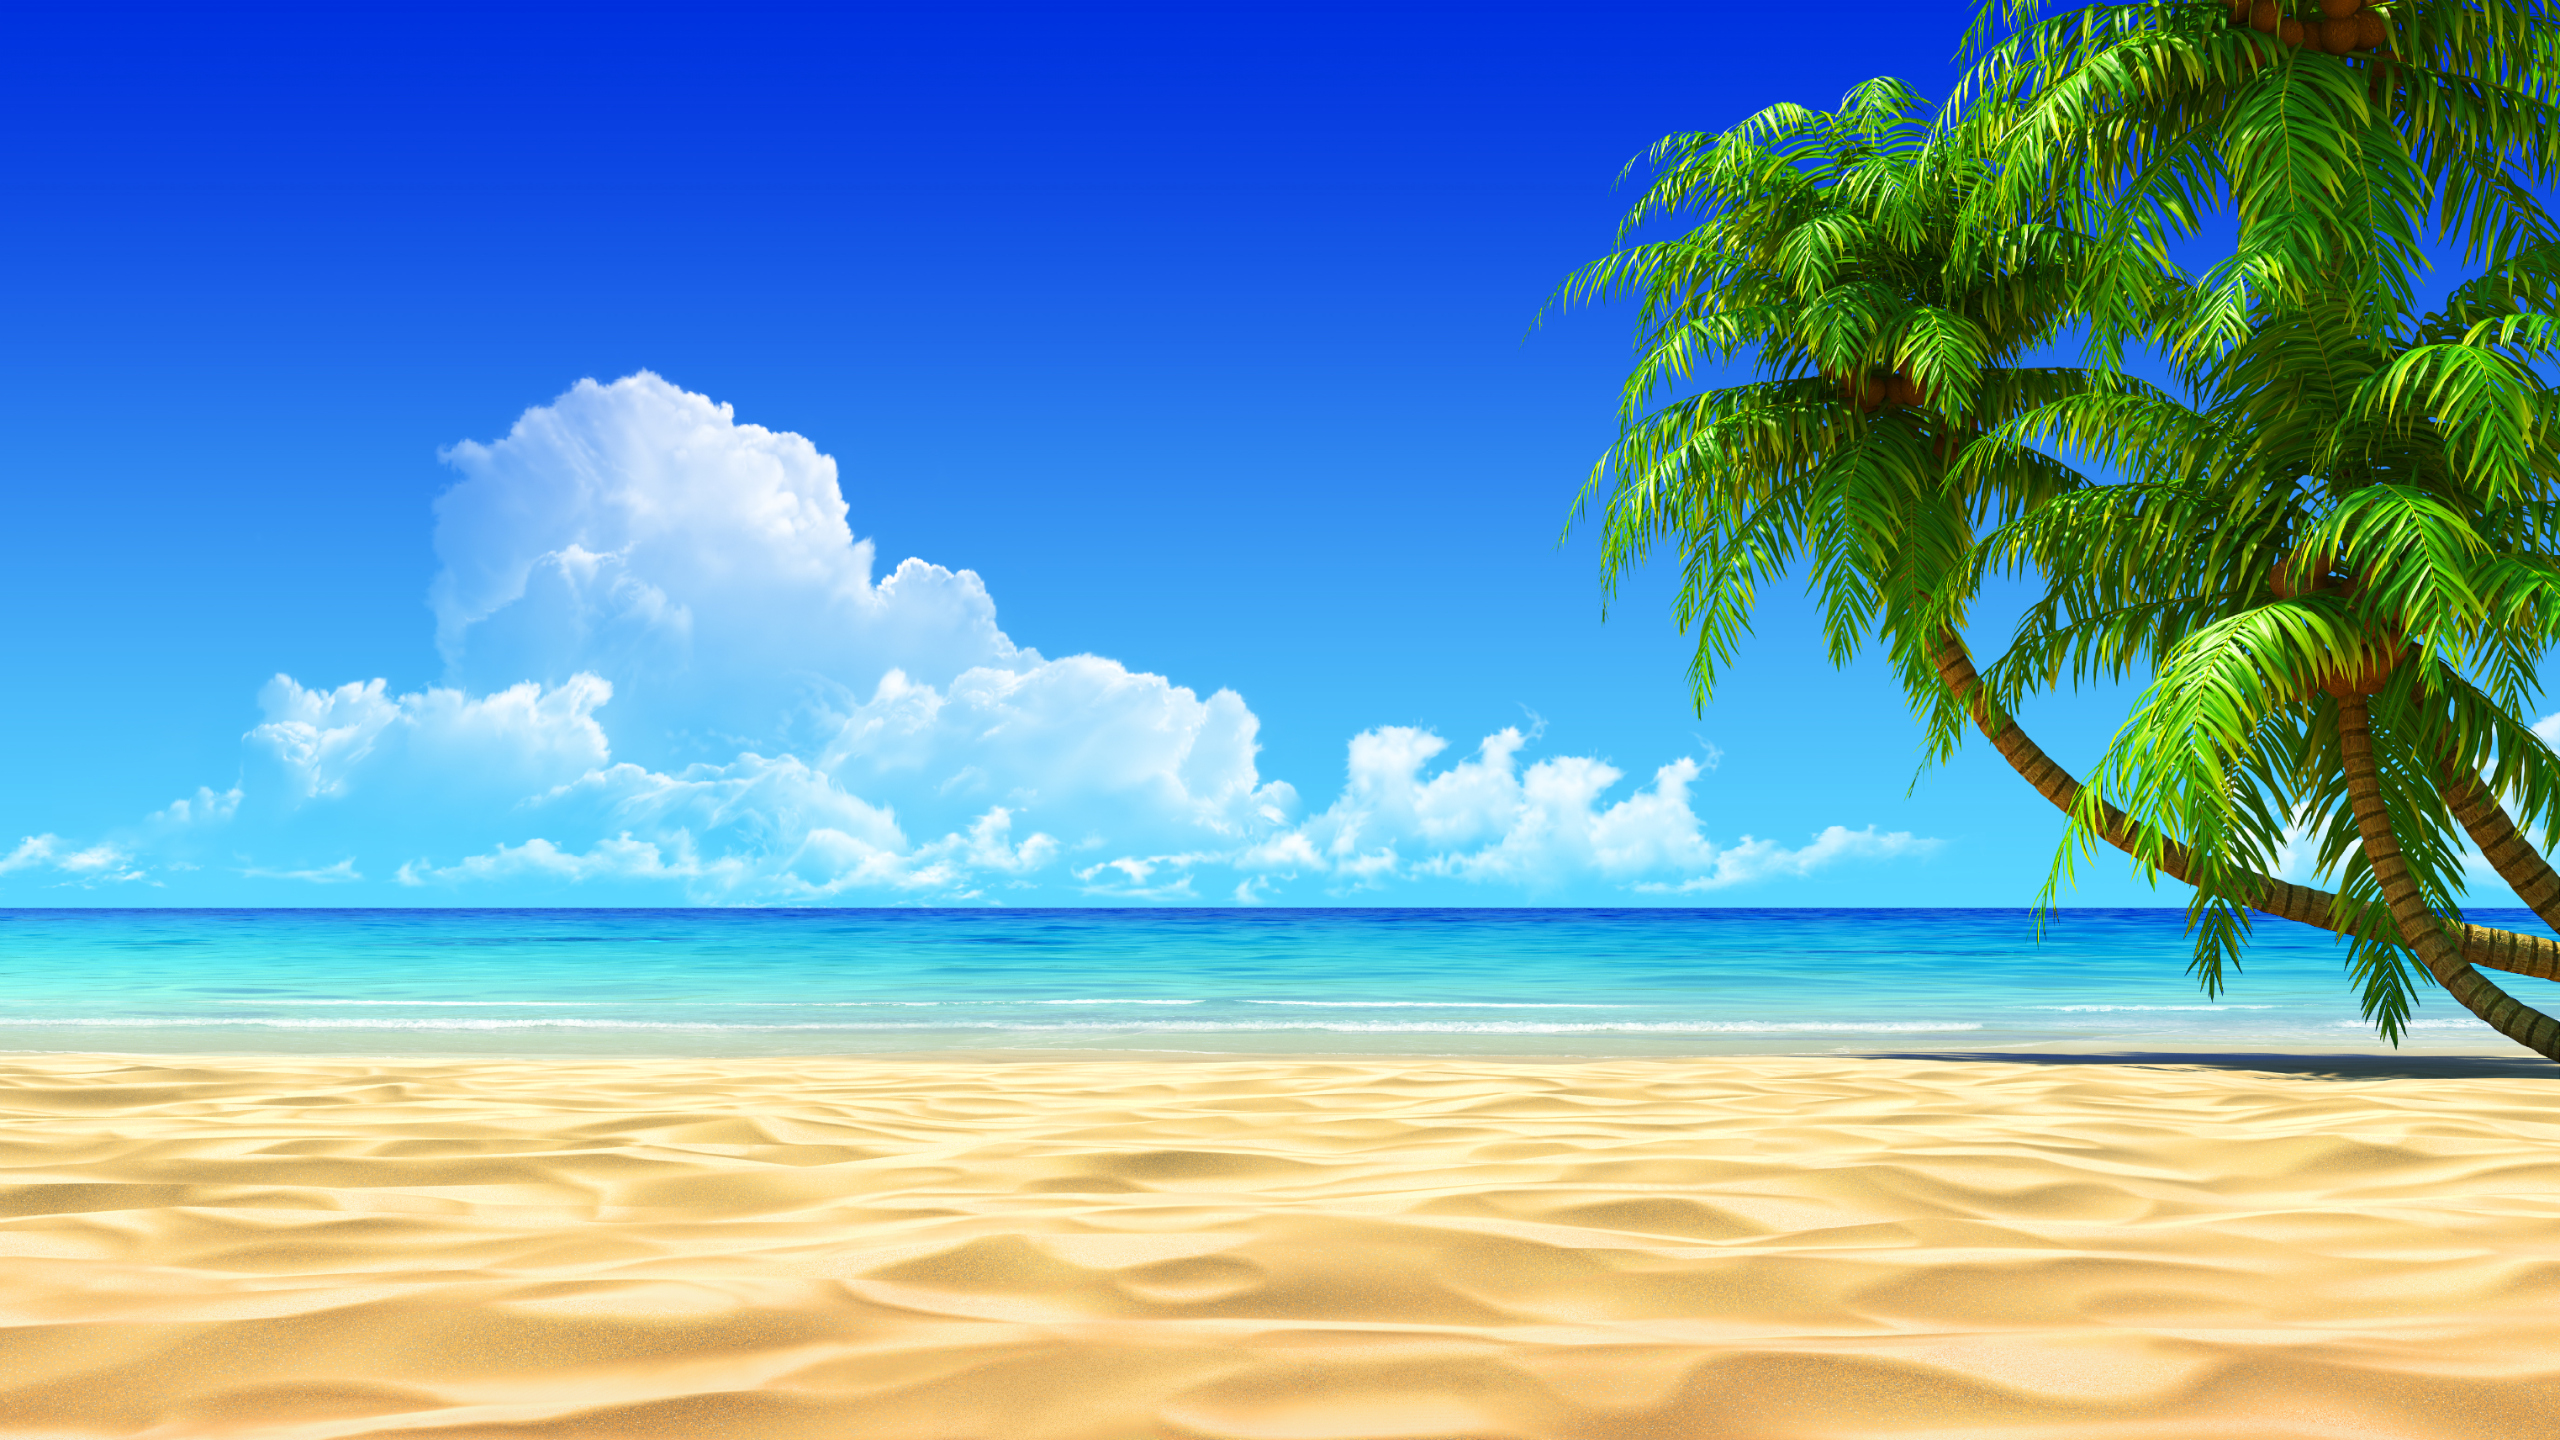 Beach Background Wallpaper 2560x1440 593